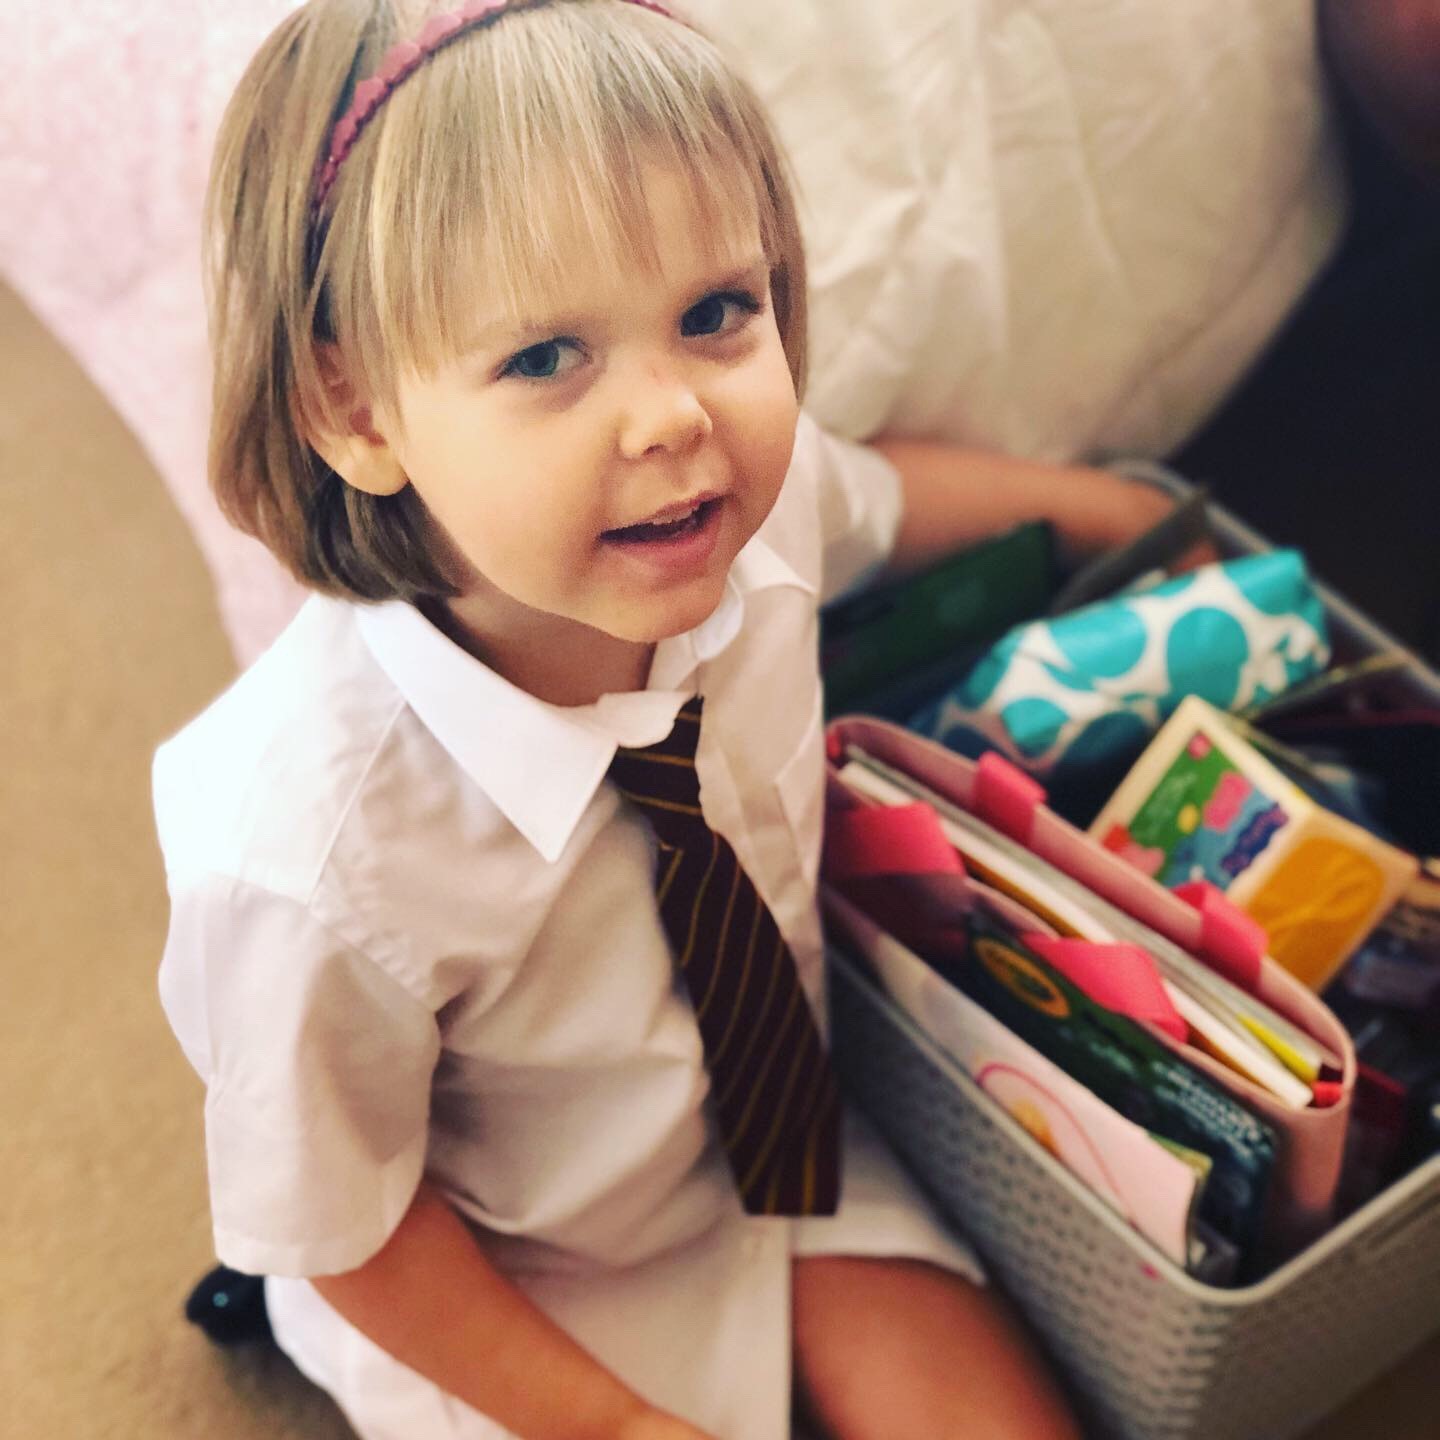 Sophia in her school uniform